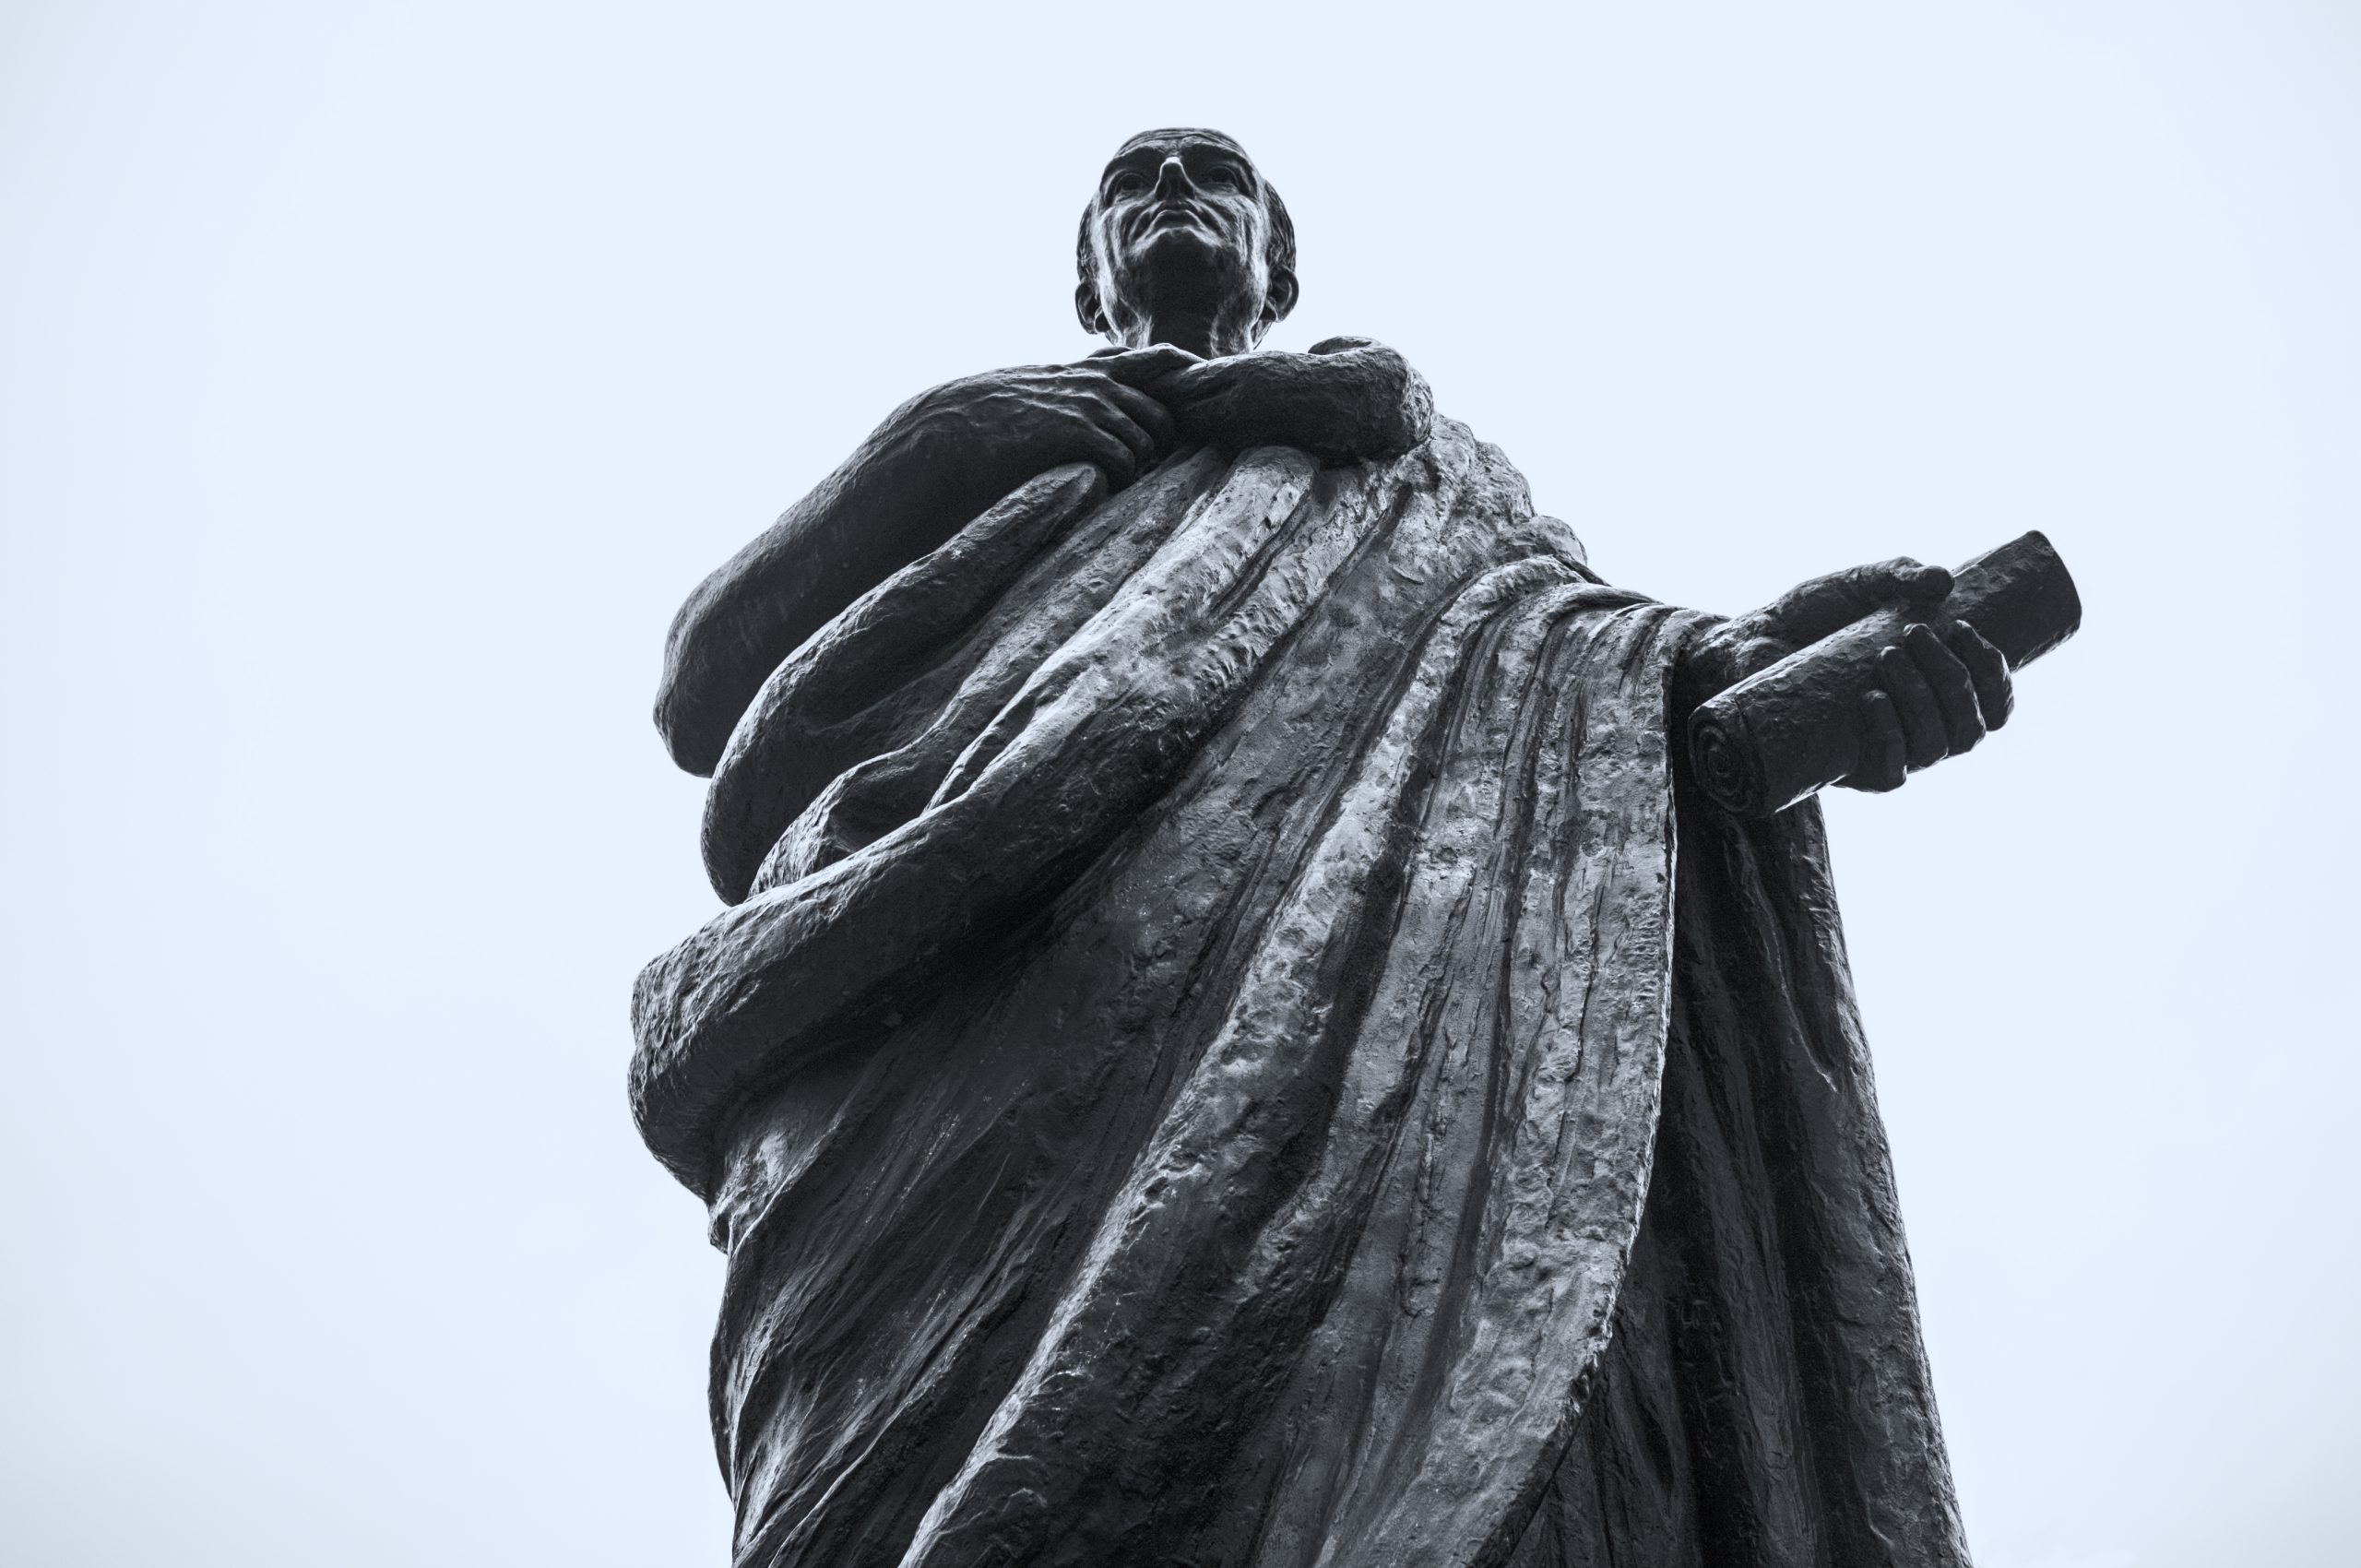 Bronze Statue of Seneca the Younger, Roman Stoic philosopher. Cordoba, Spain. Depositphotos.